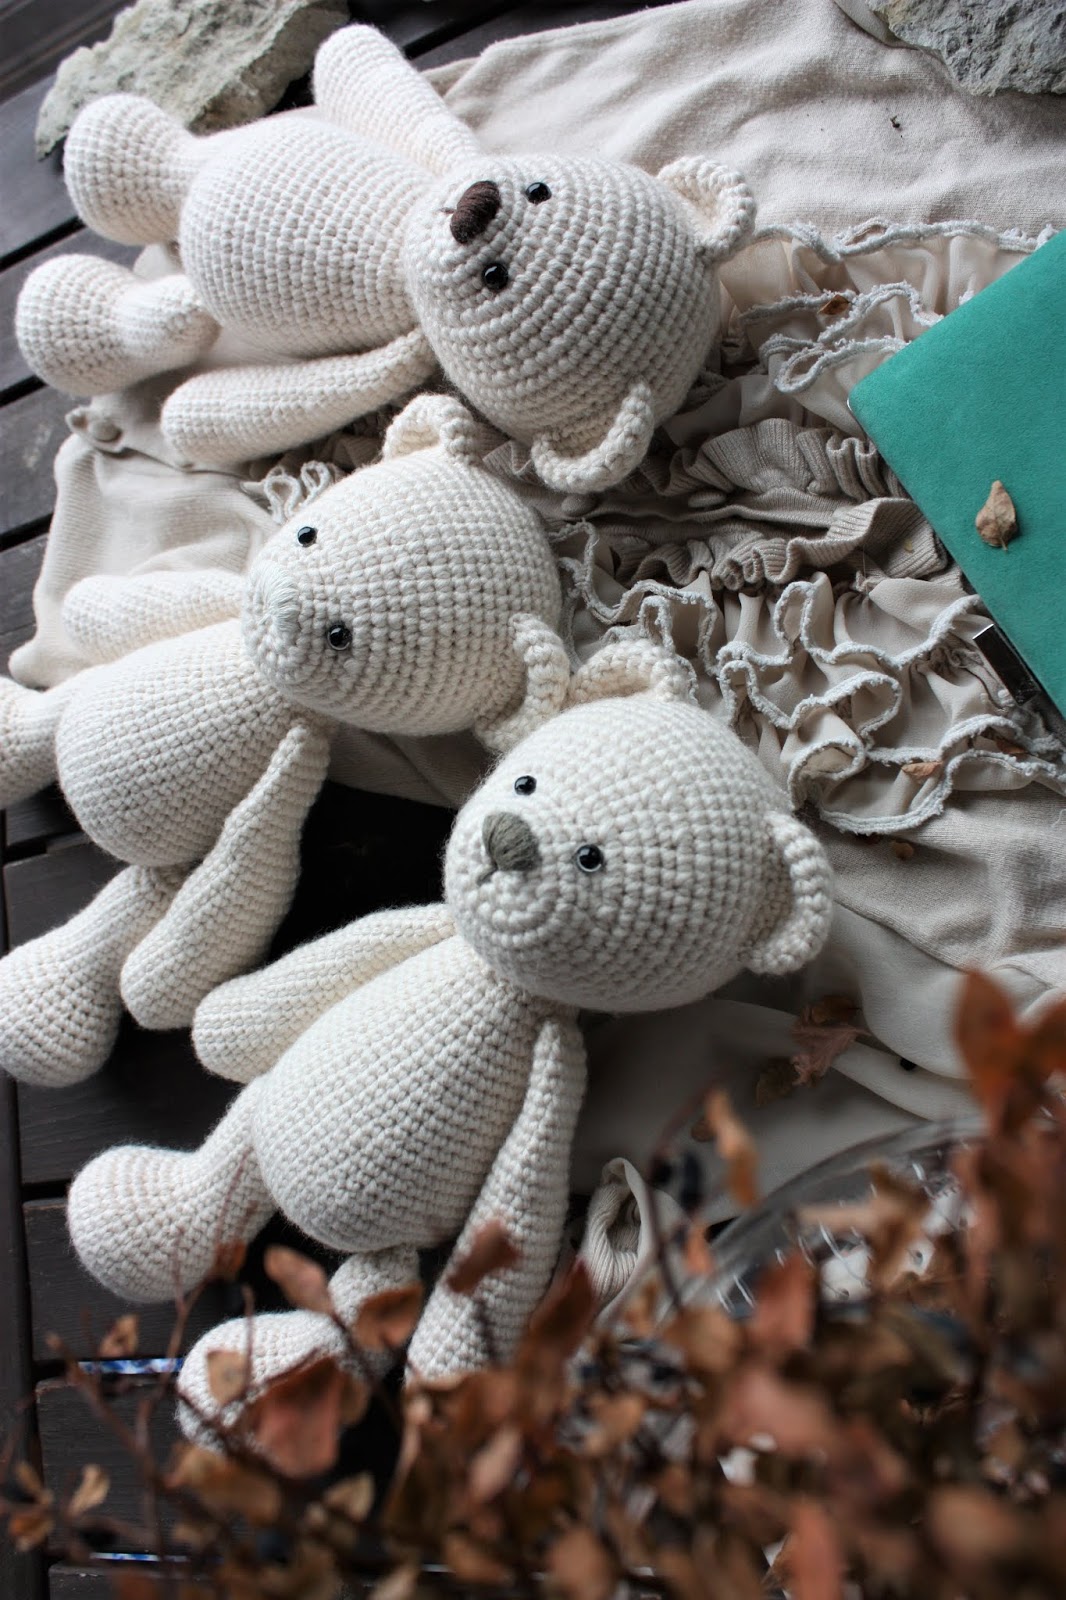 Happyamigurumi: Lucas the Teddy Bear - Crochet Toy Pattern